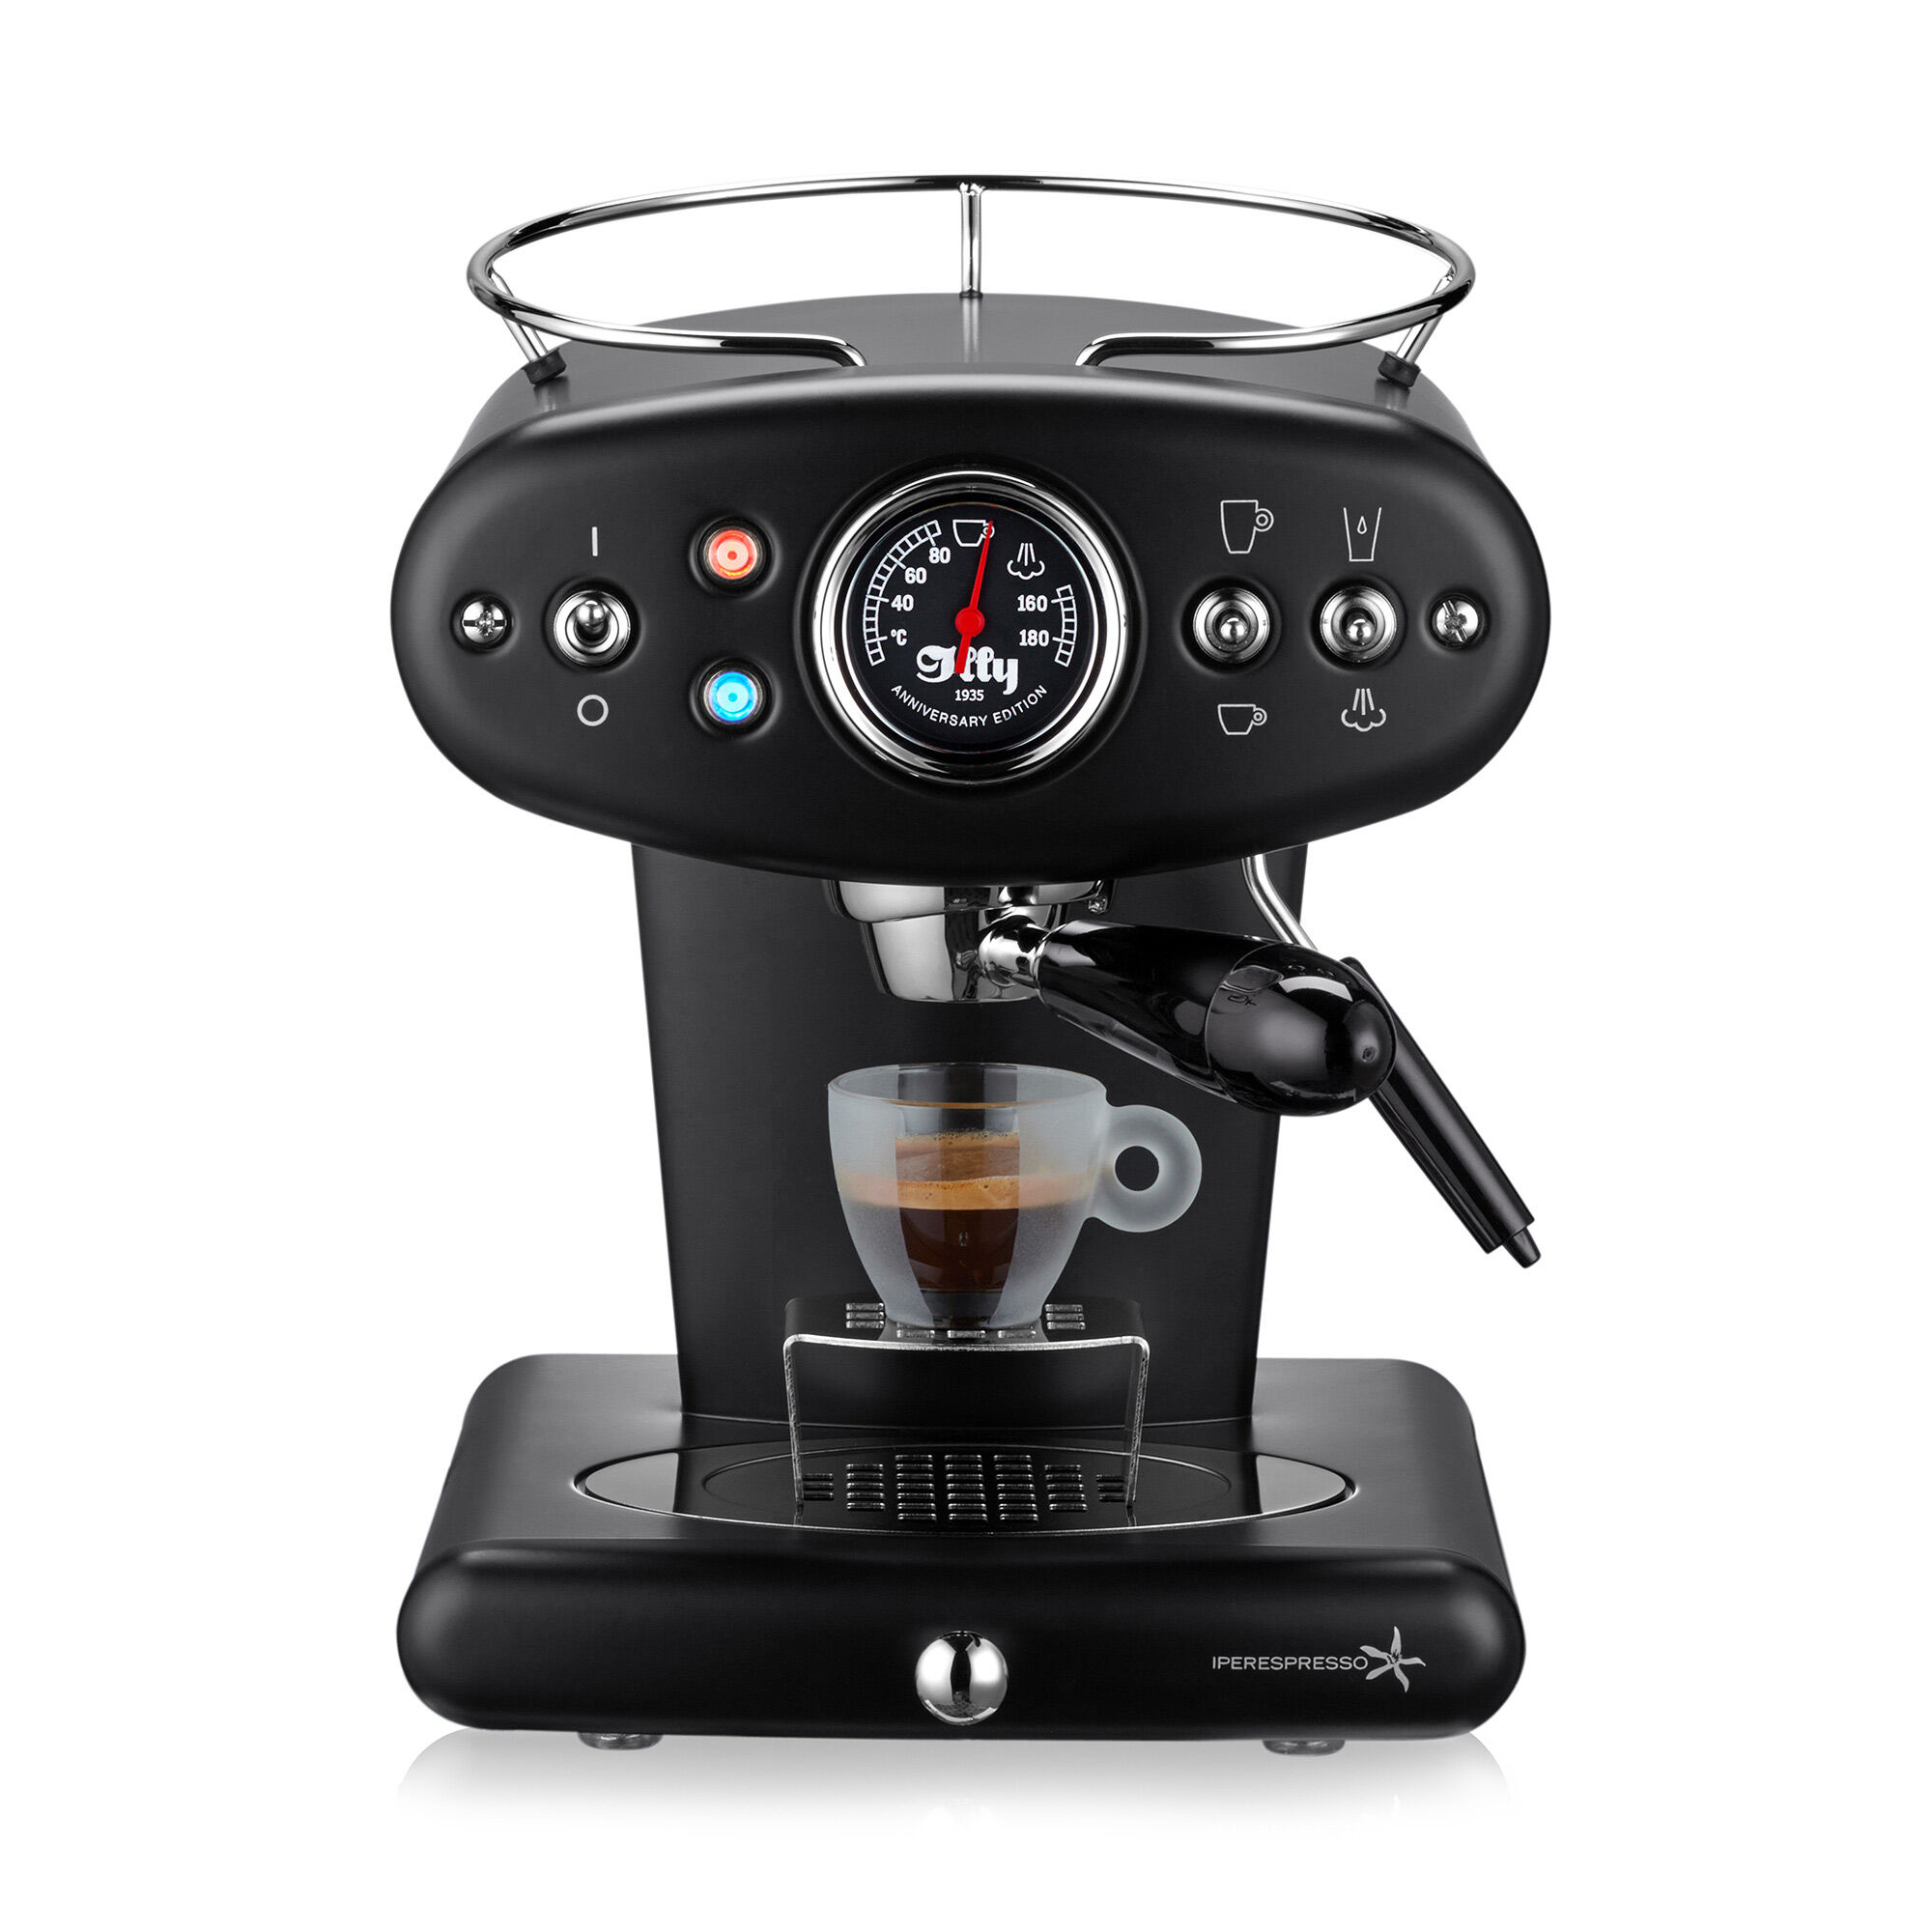 Illy X1 Anniversary Espresso Machine, Stainless